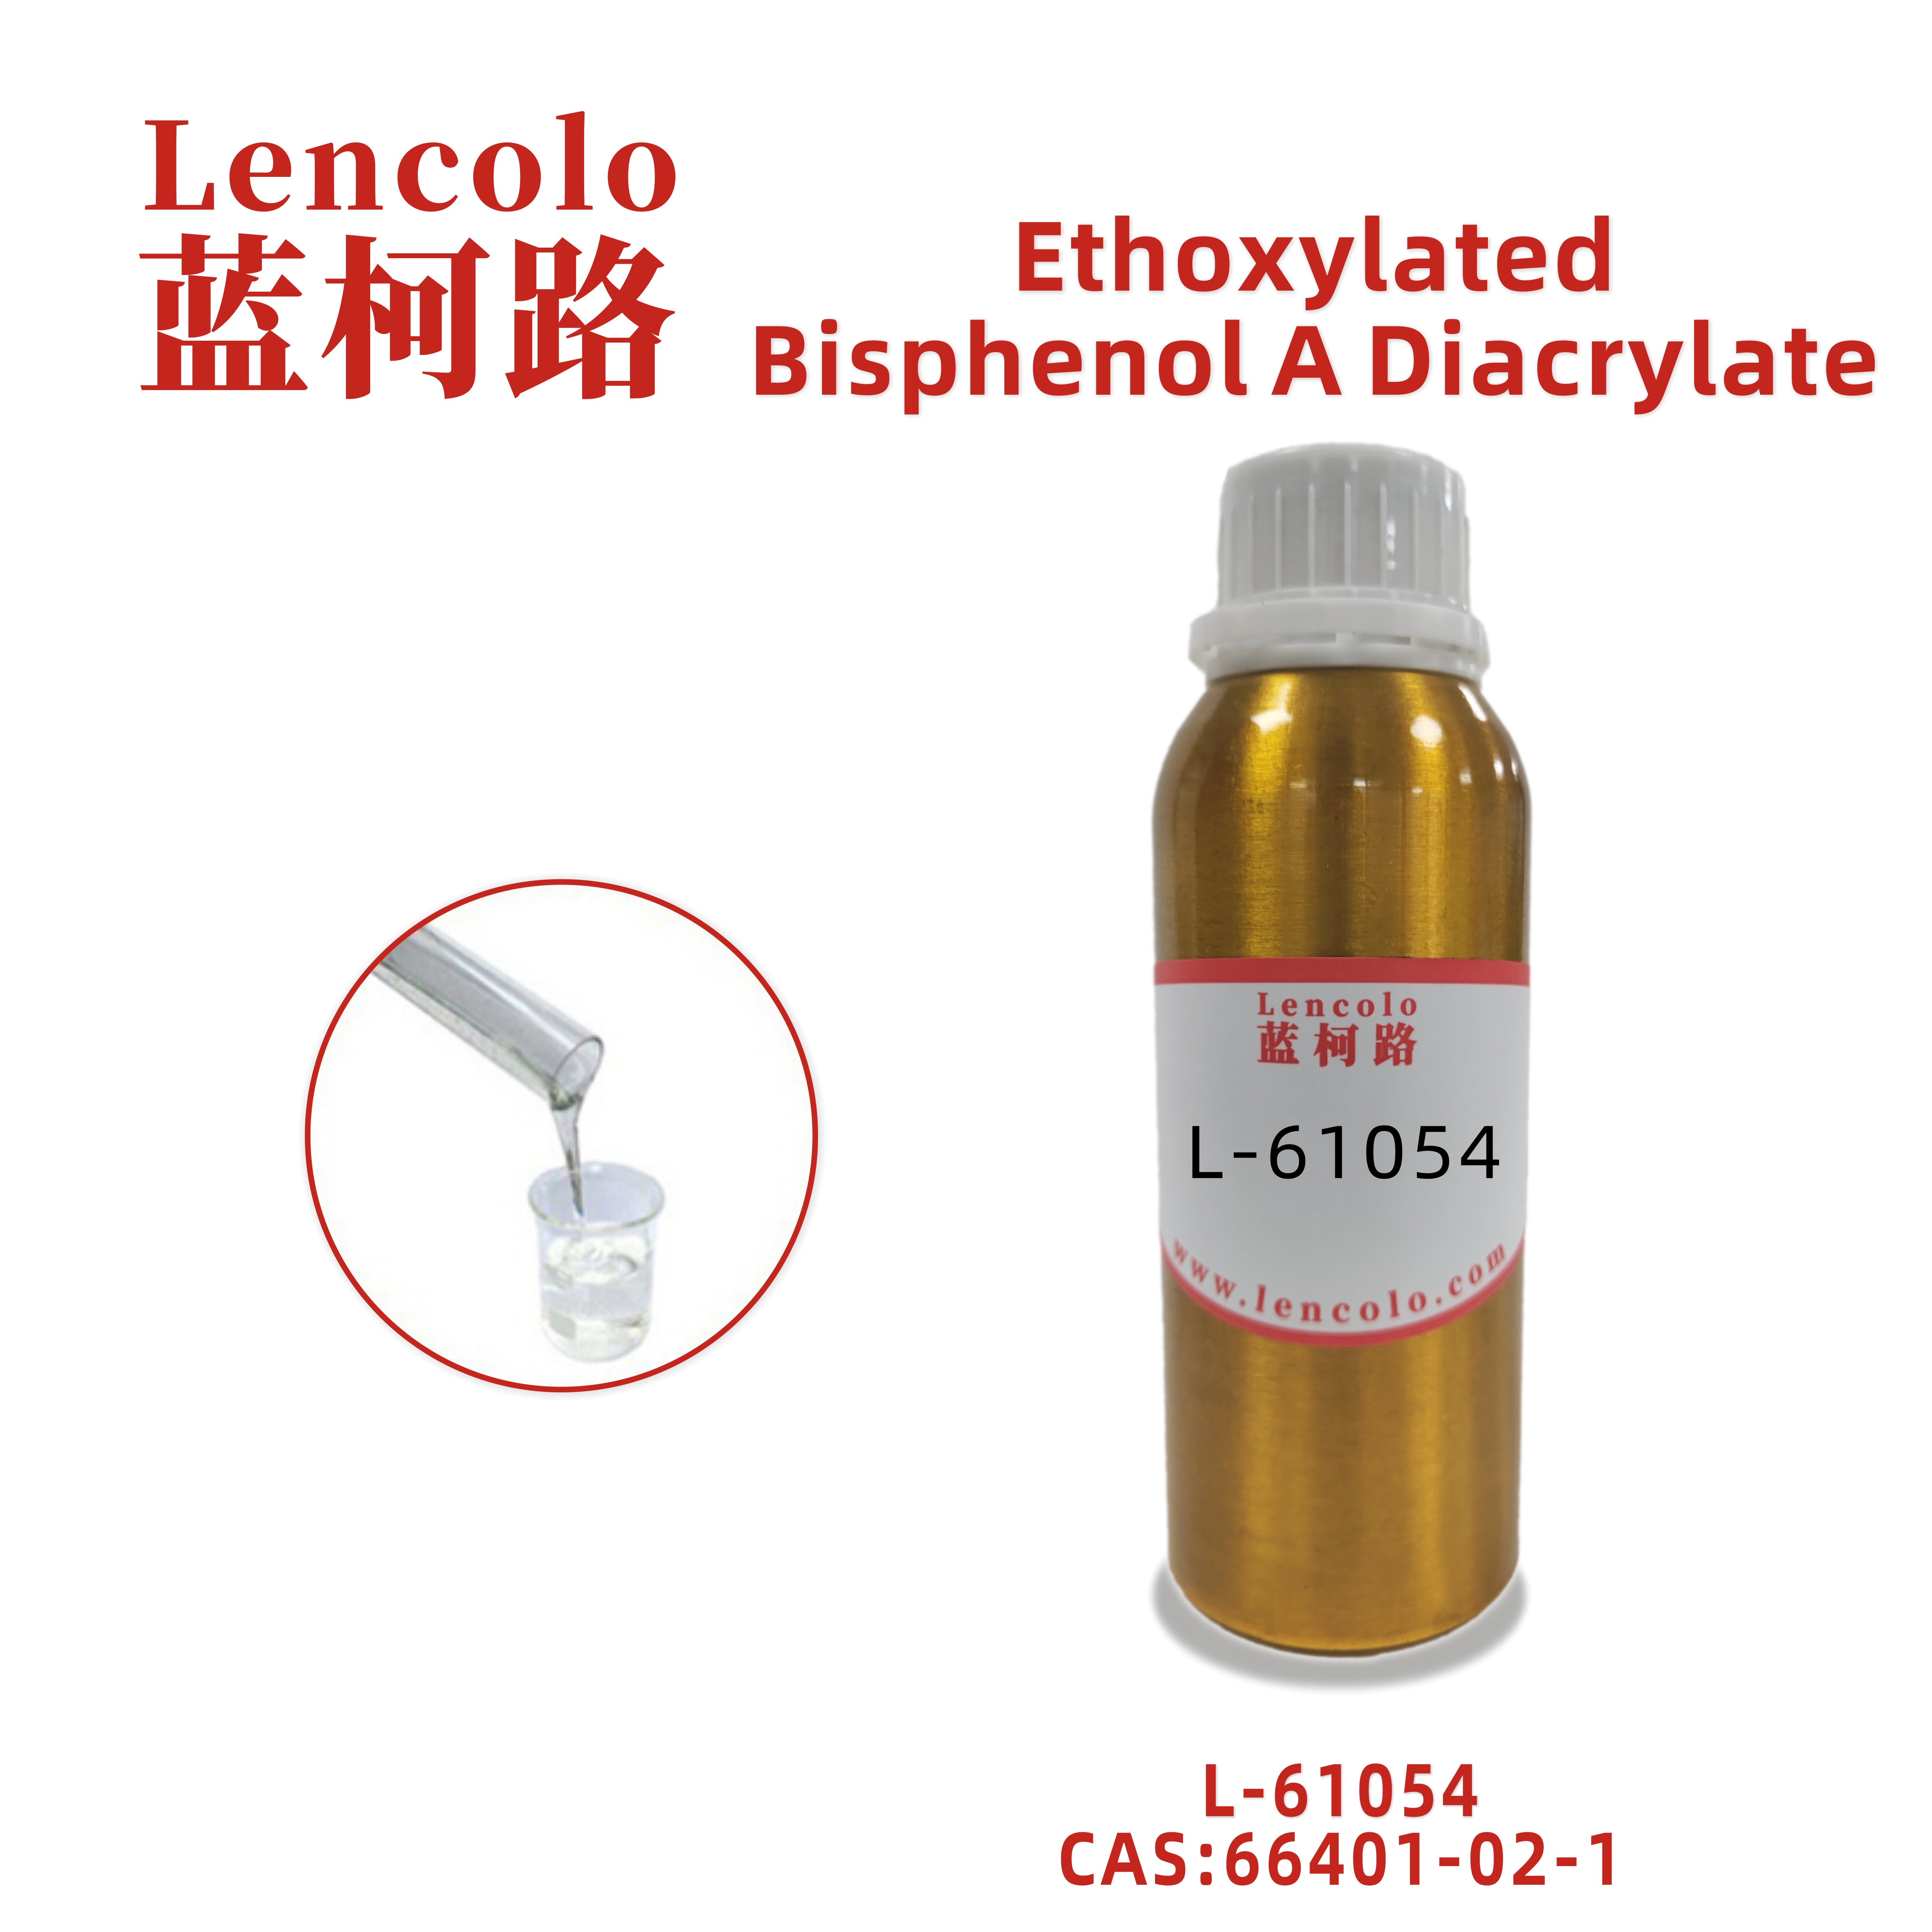 L-61054 (BPA3EODA) Ethoxylated Bisphenol A Diacrylate